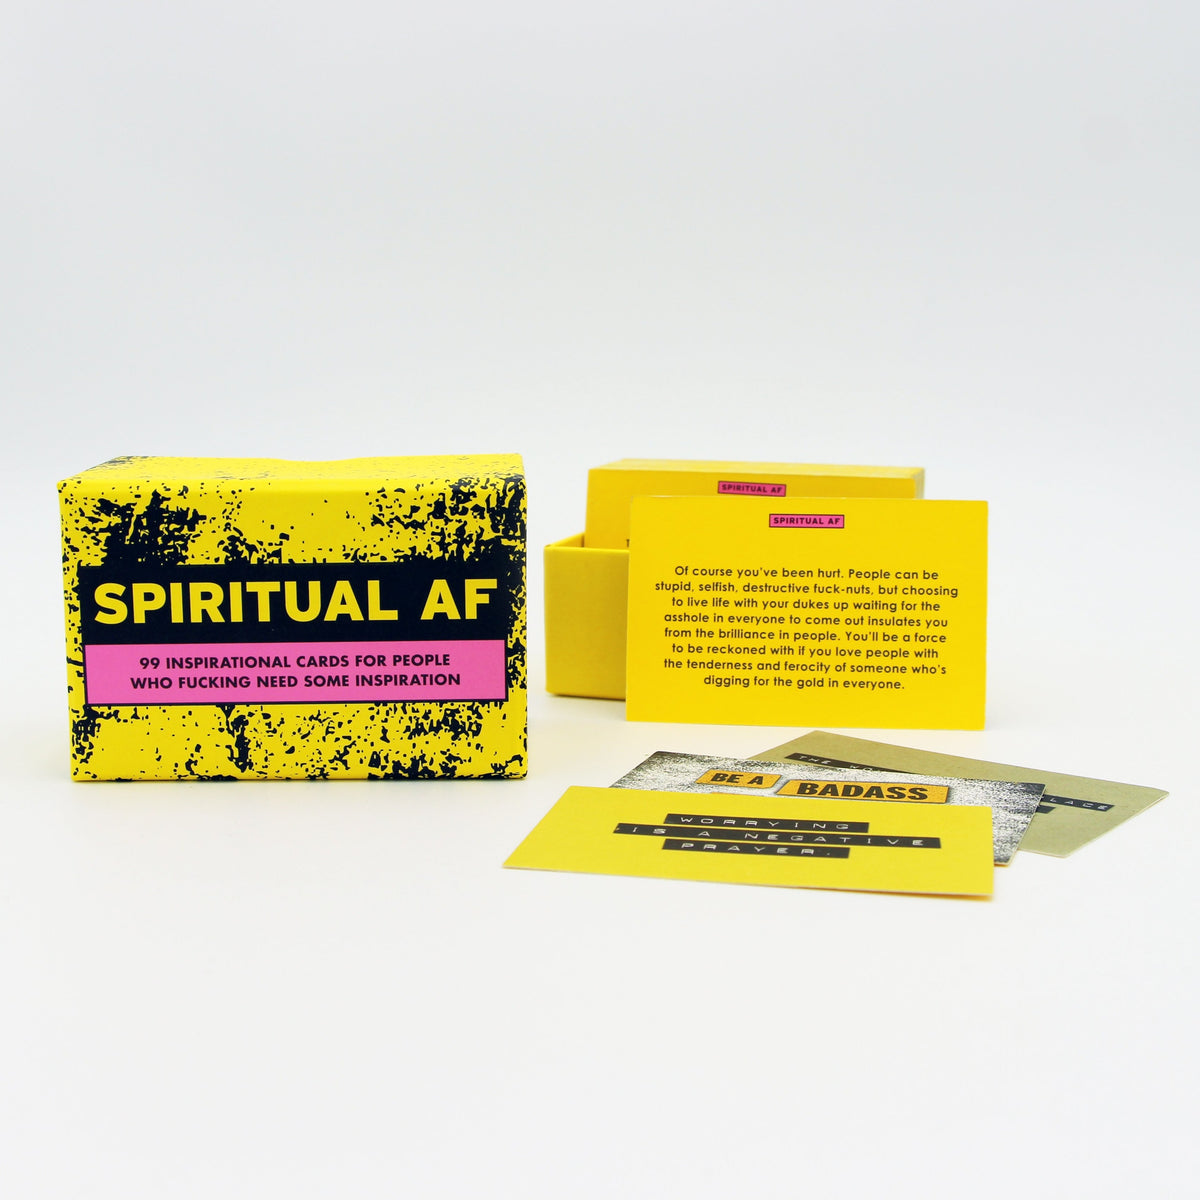 spiritual affirmation cards, spiritual oracle cards, spiritual affirmation deck, spiritual deck, spiritual AF cards, Spiritual AF deck, affirmations for spirituality, spiritual affirmations, spiritual oracle deck